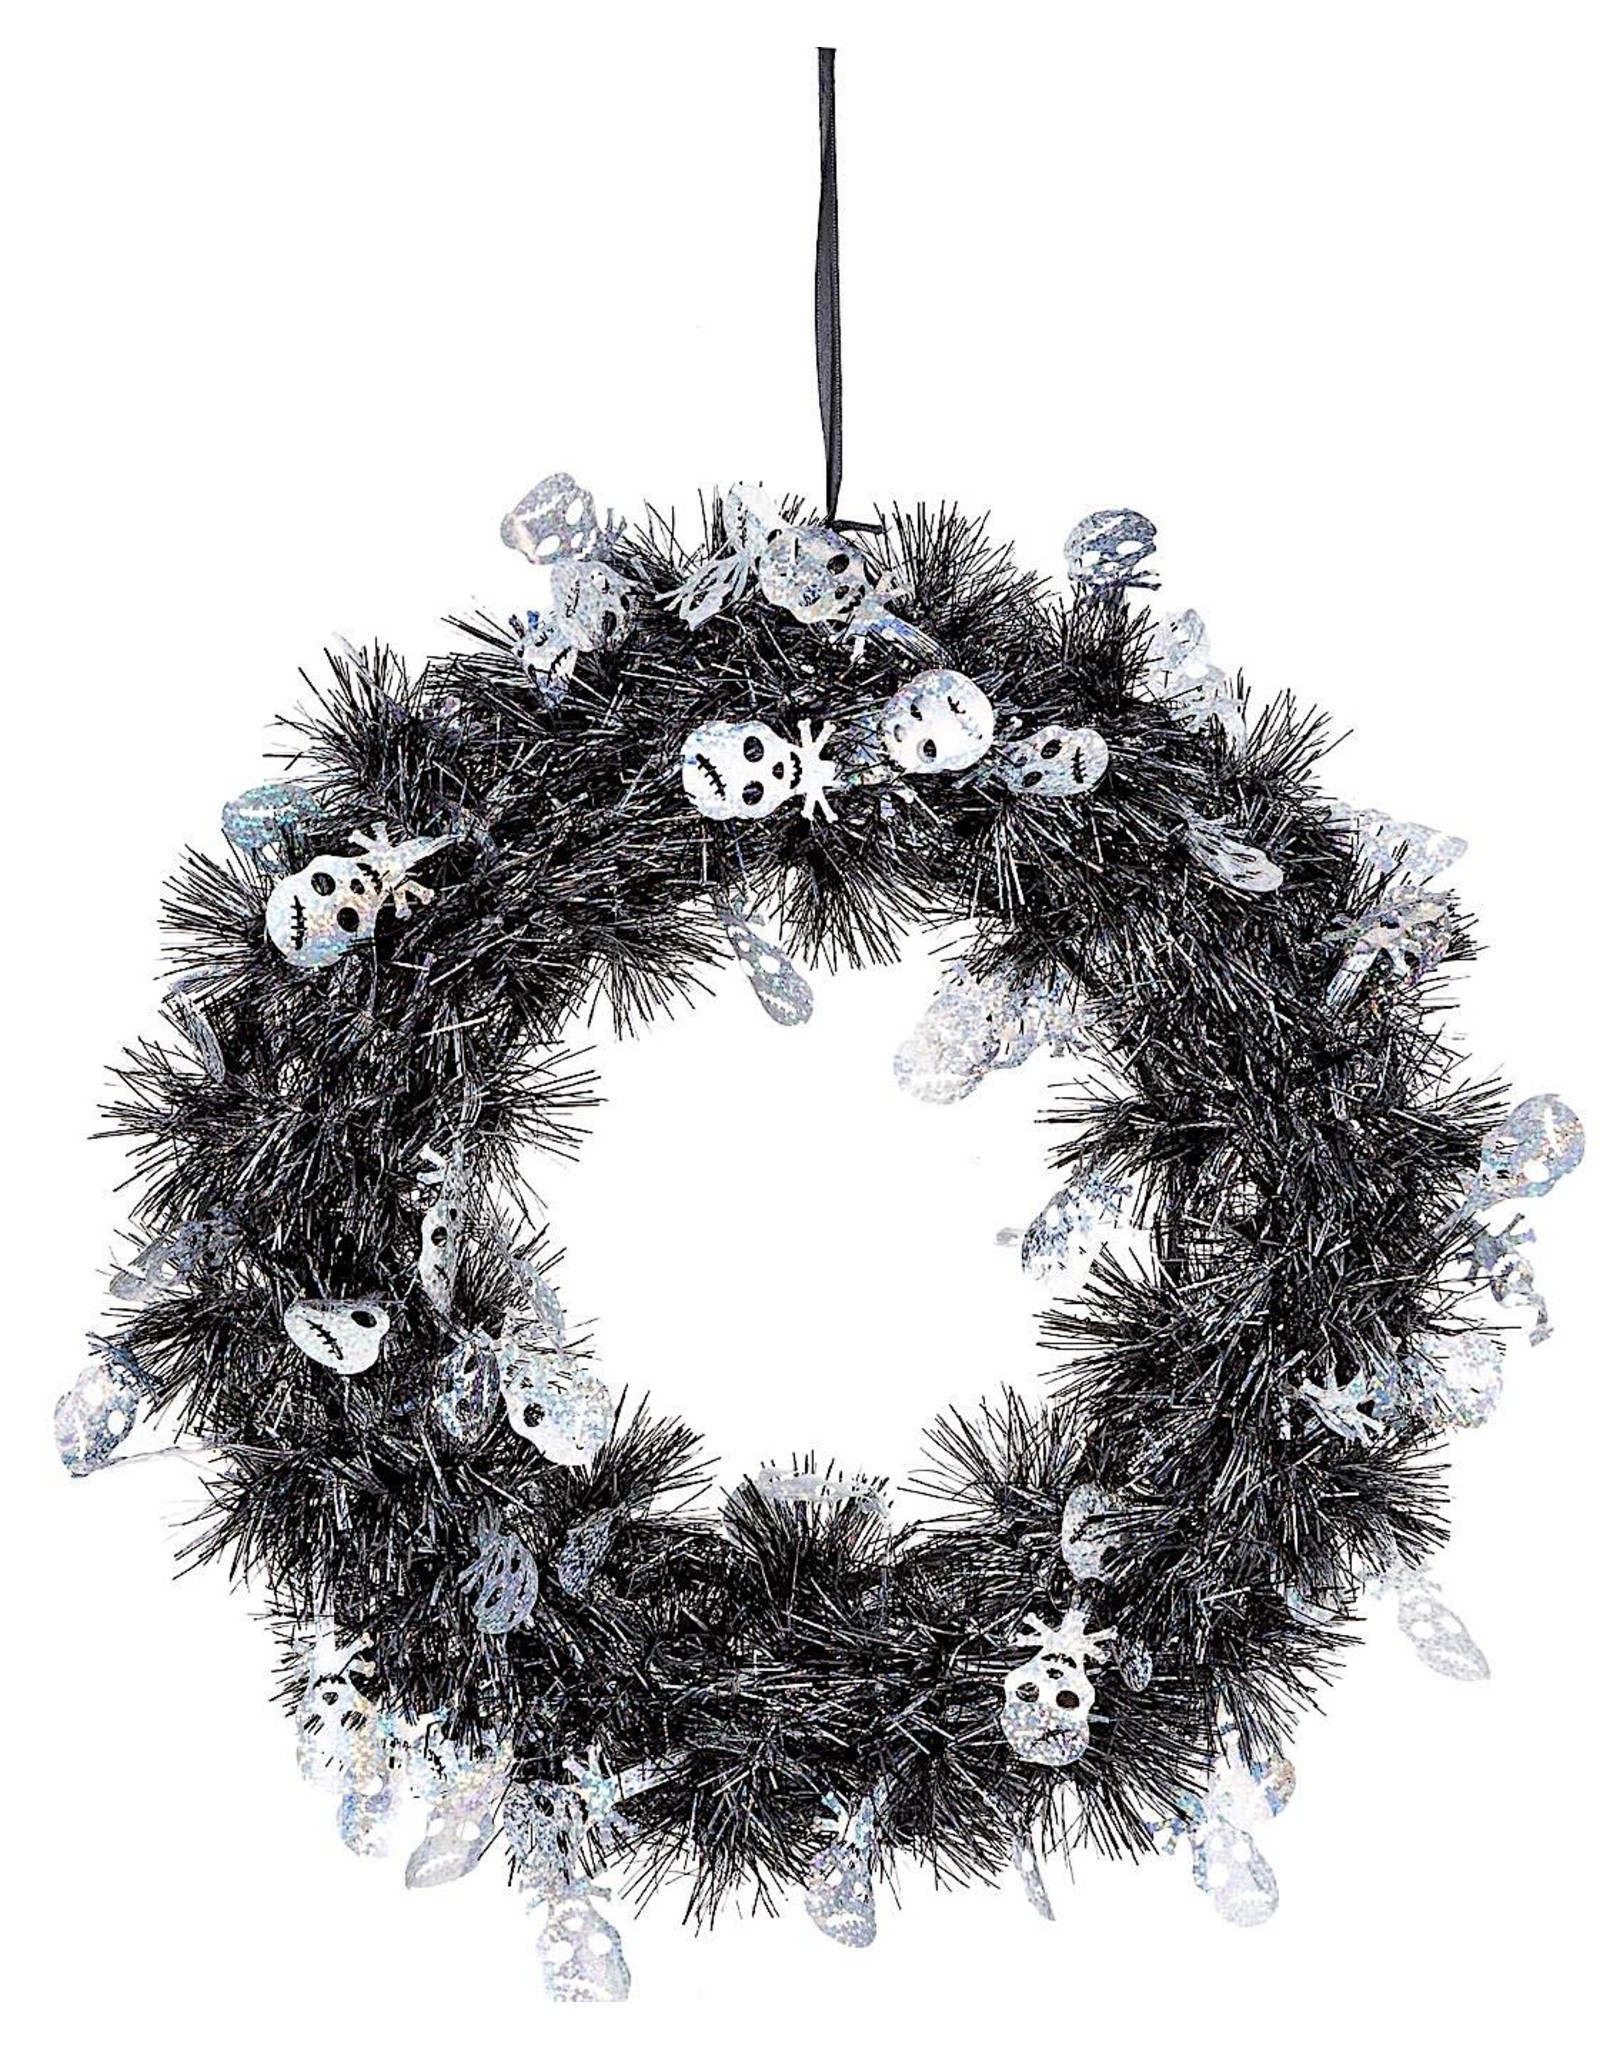 Darice Halloween Tinsel Wreath With Skulls 11 inch